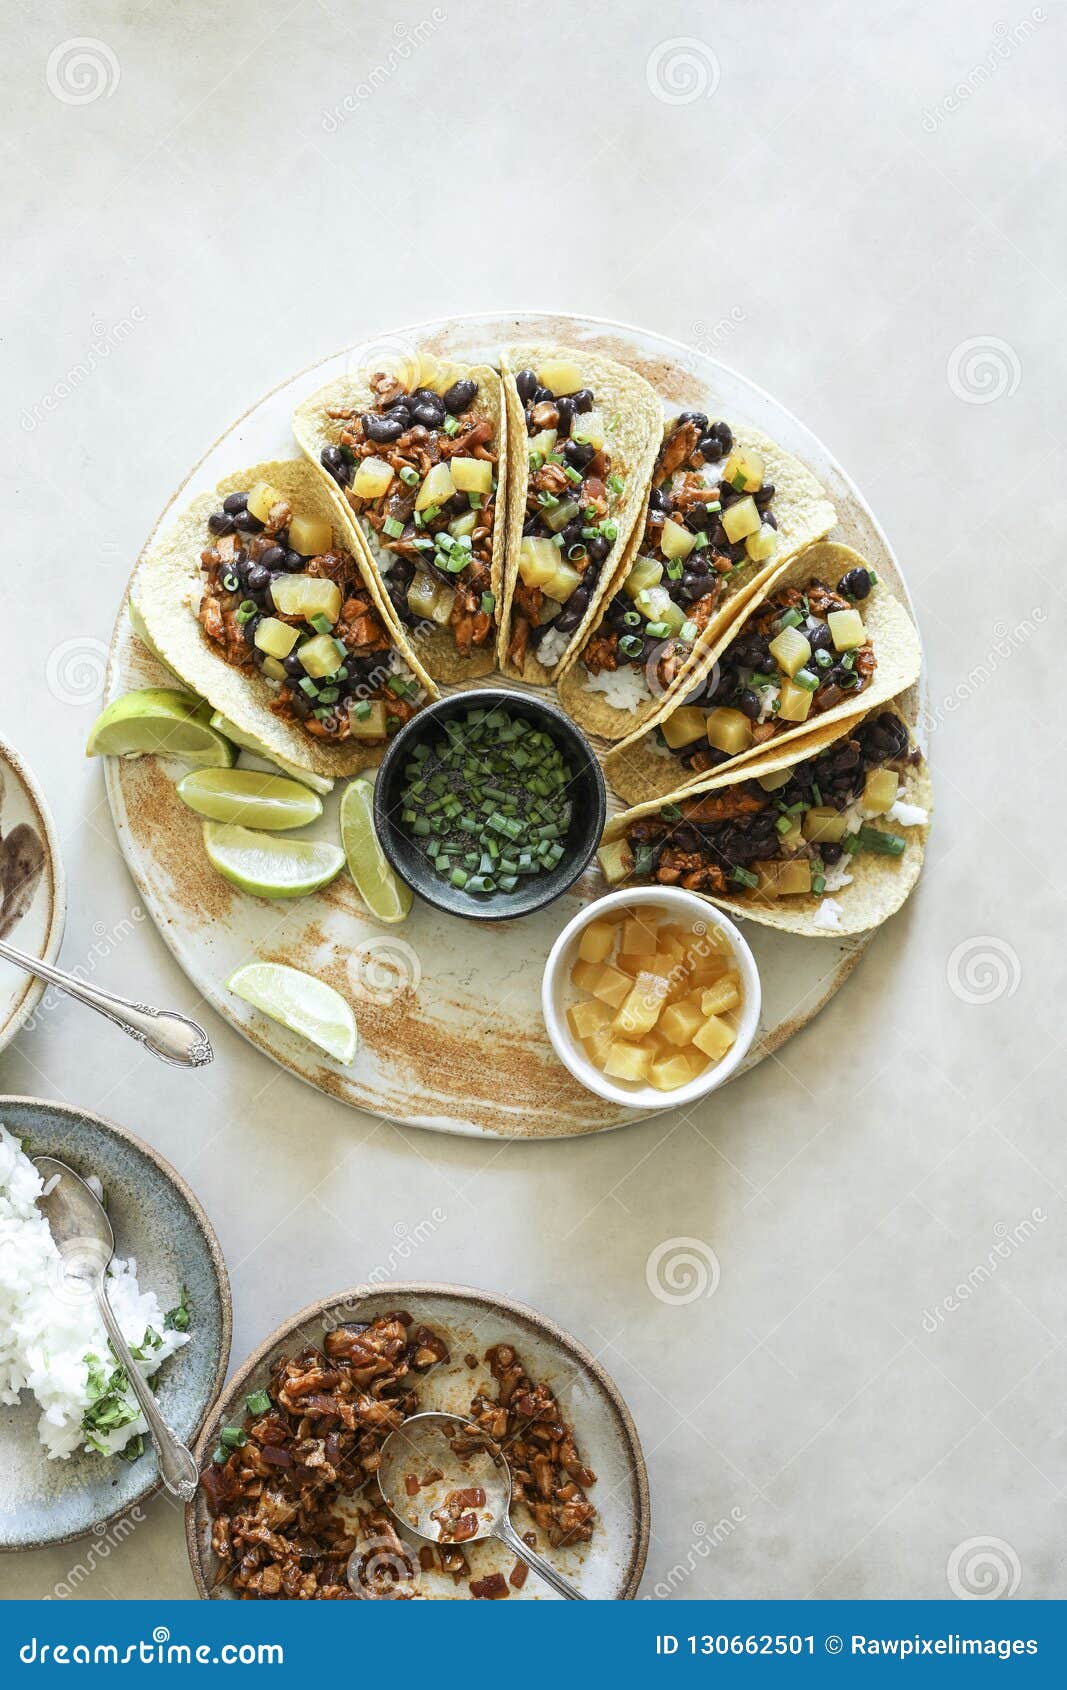 homemade vegan taco food photography